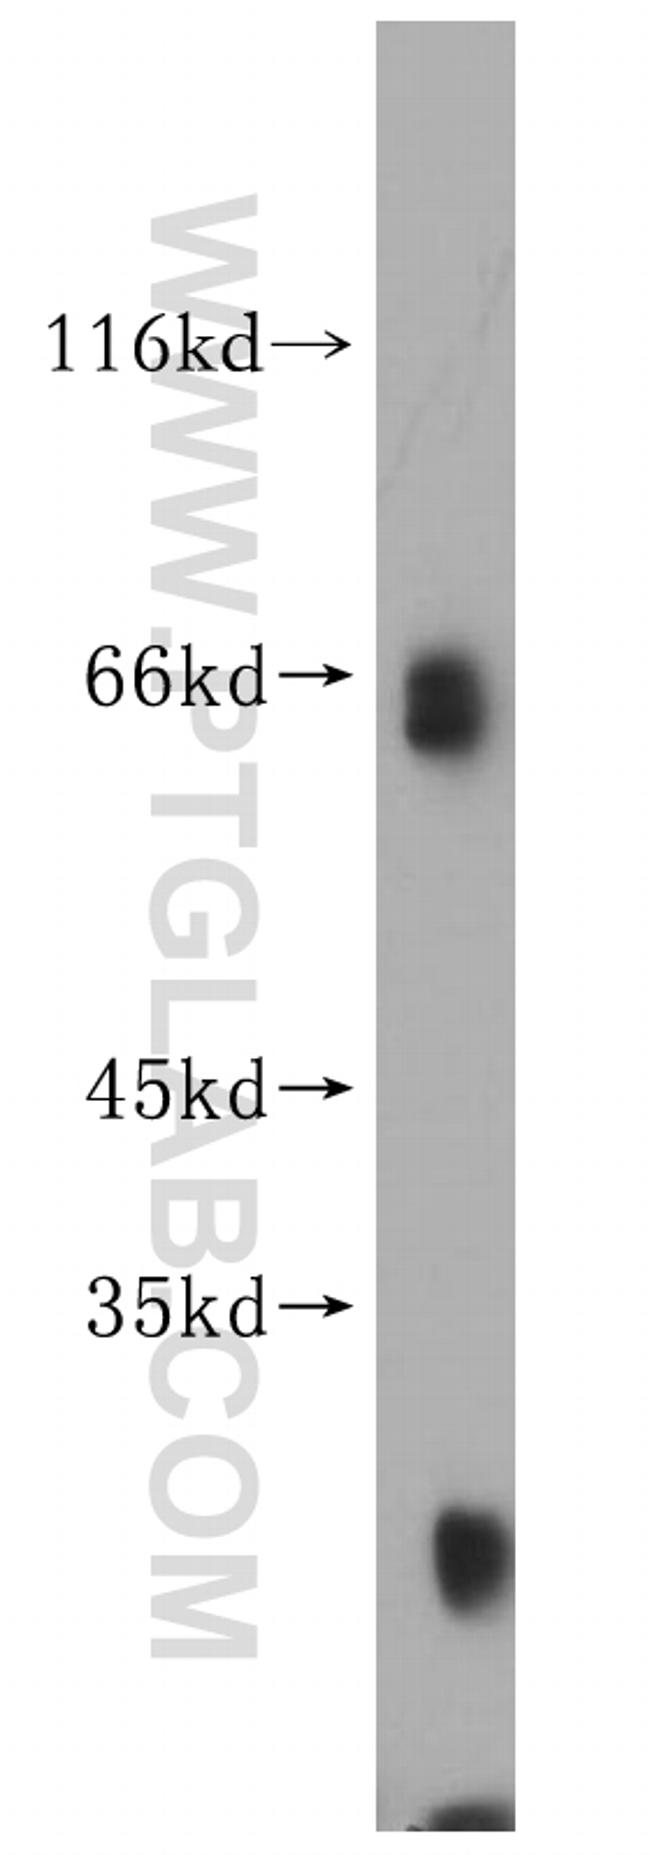 KLHL3 Antibody in Western Blot (WB)